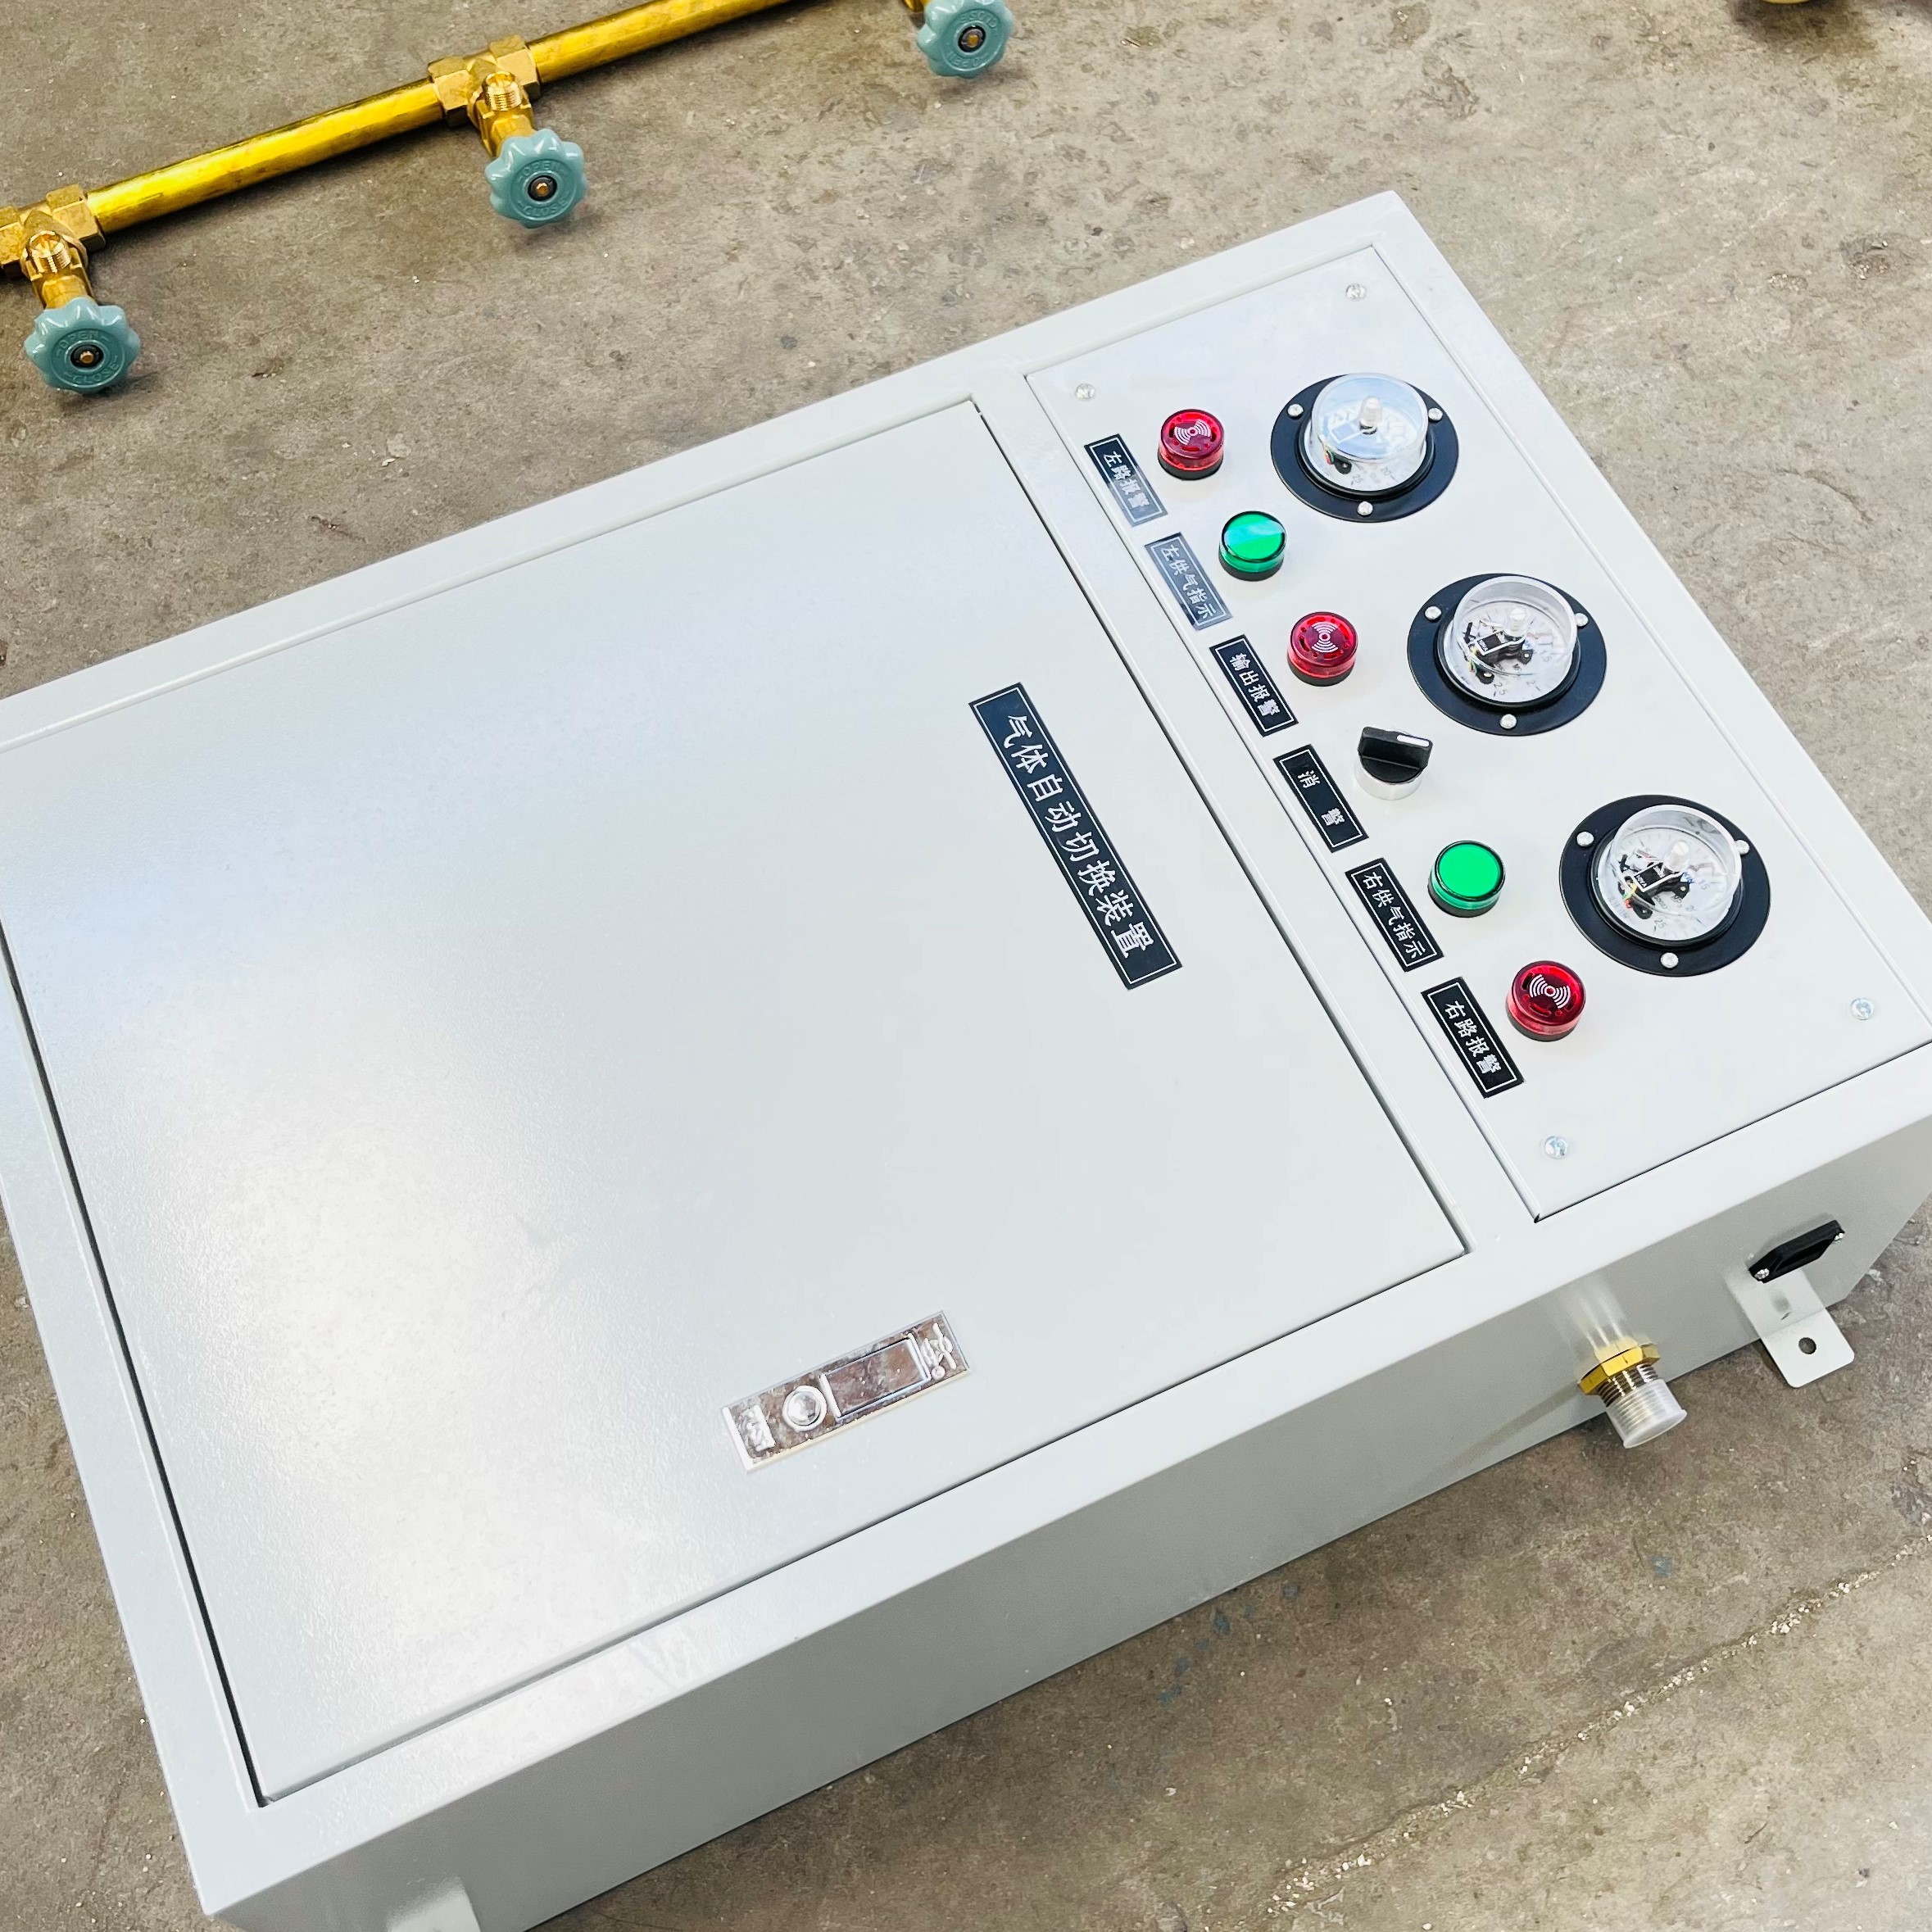 Gas Automatic Switching Box Used on Gas Manifold